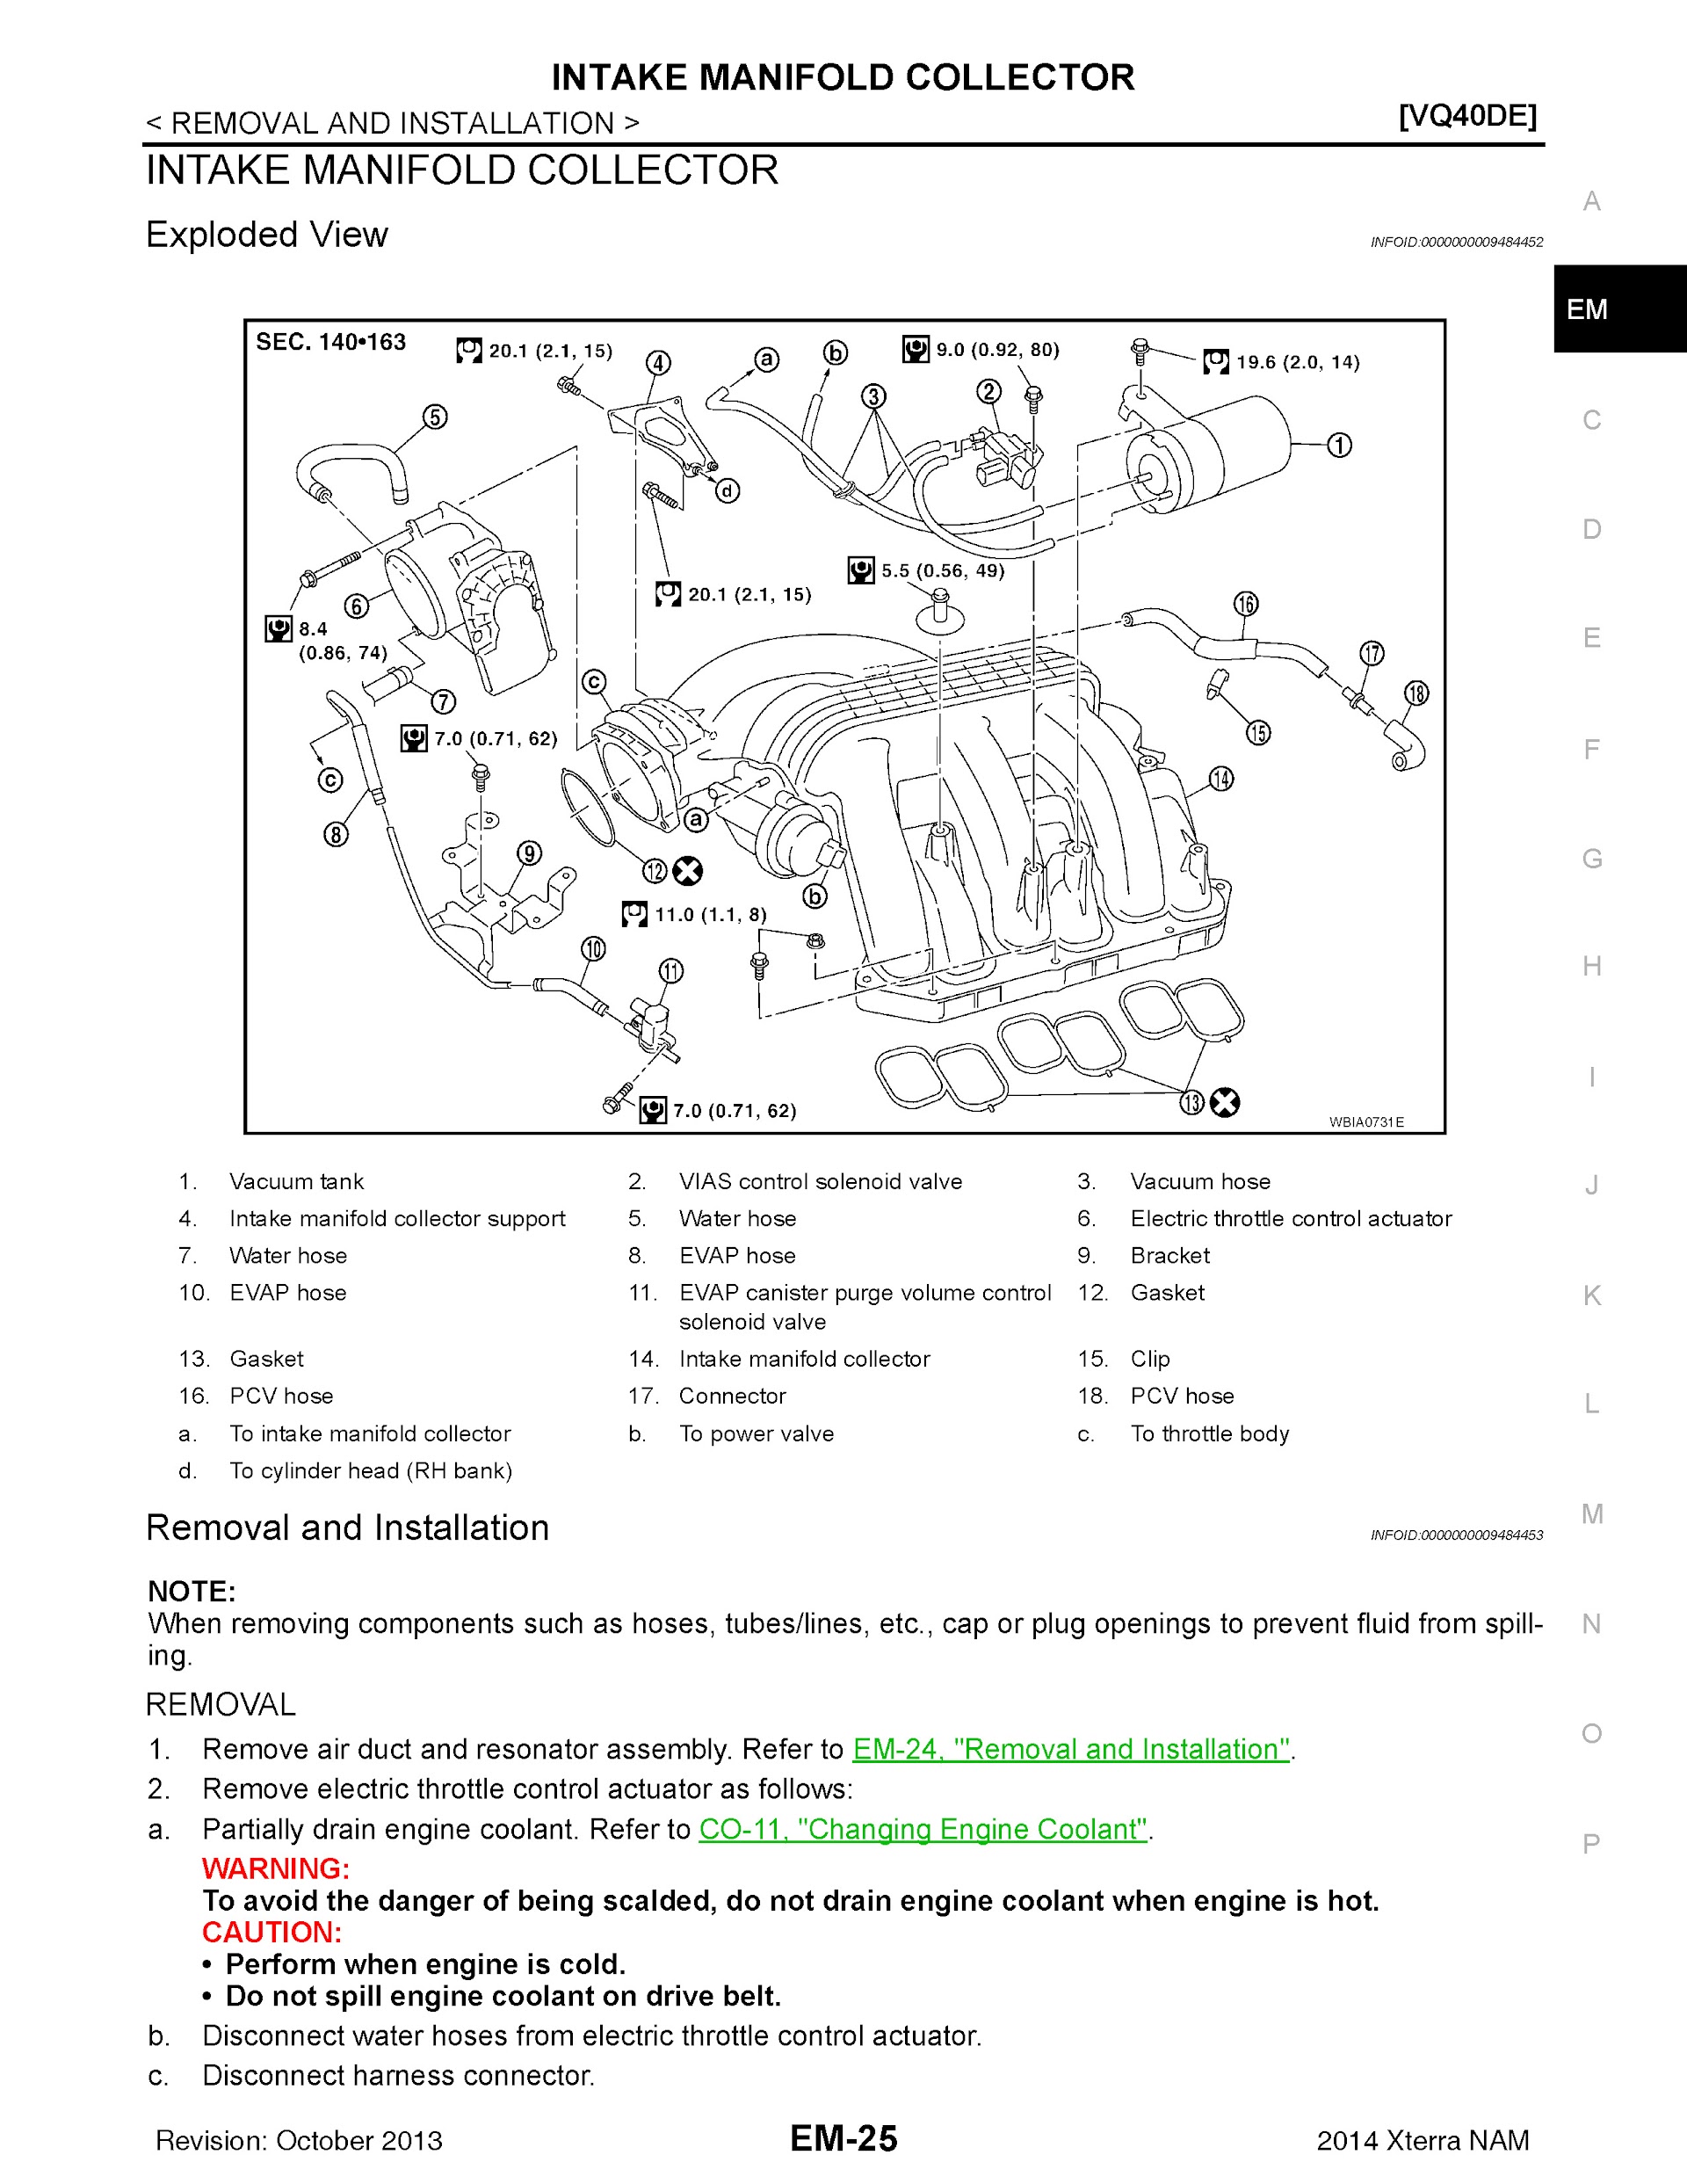 2014 Nissan Xterra Repair Manual, intake Manifold Collector